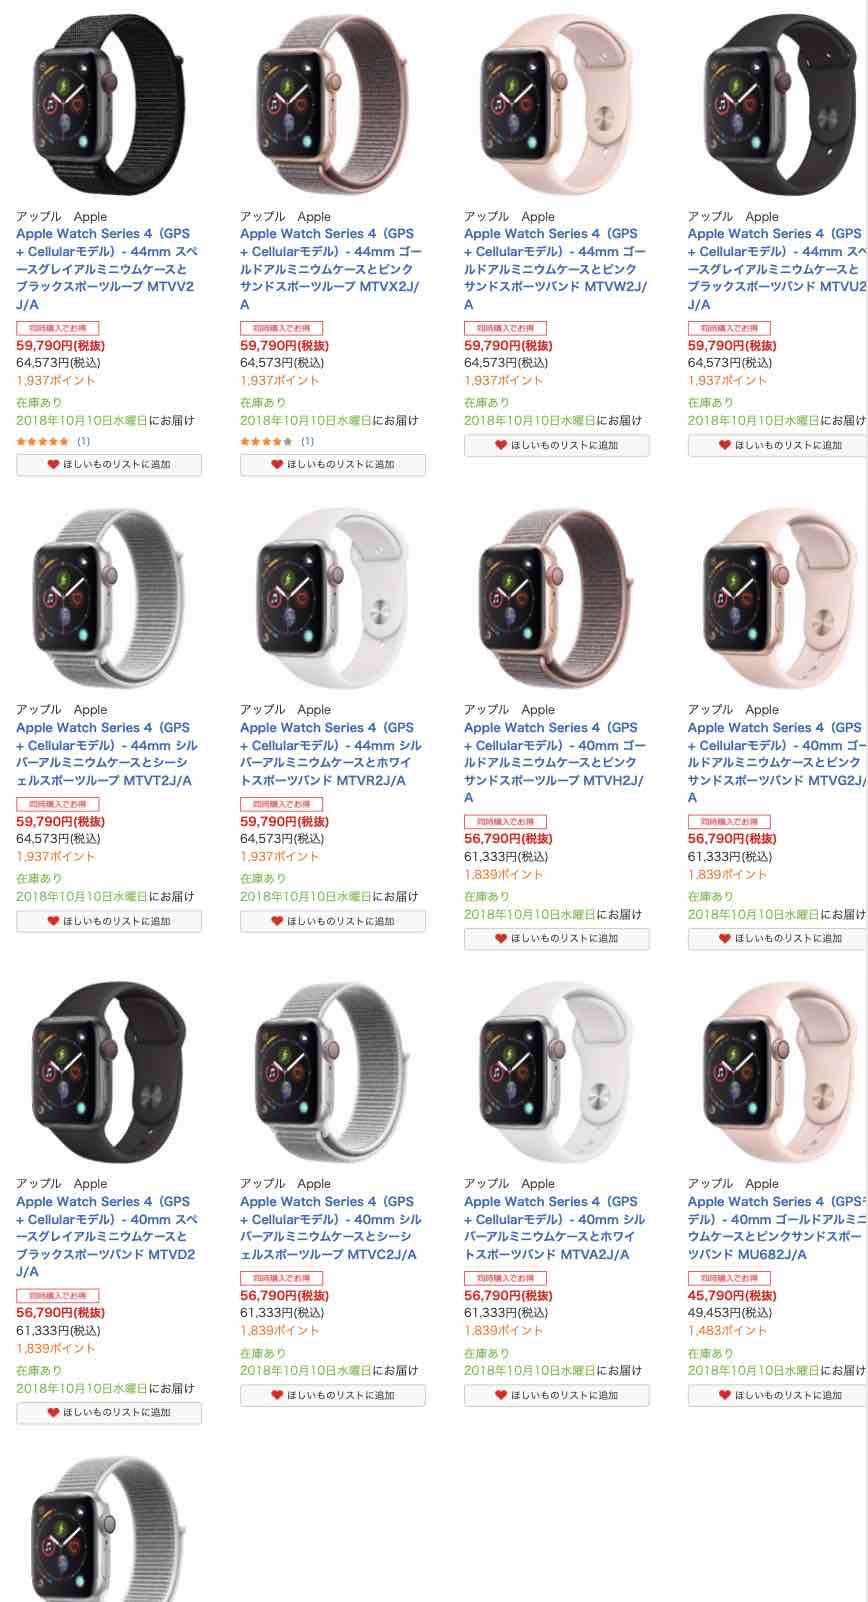 Apple Watch Series 4 stock - 2